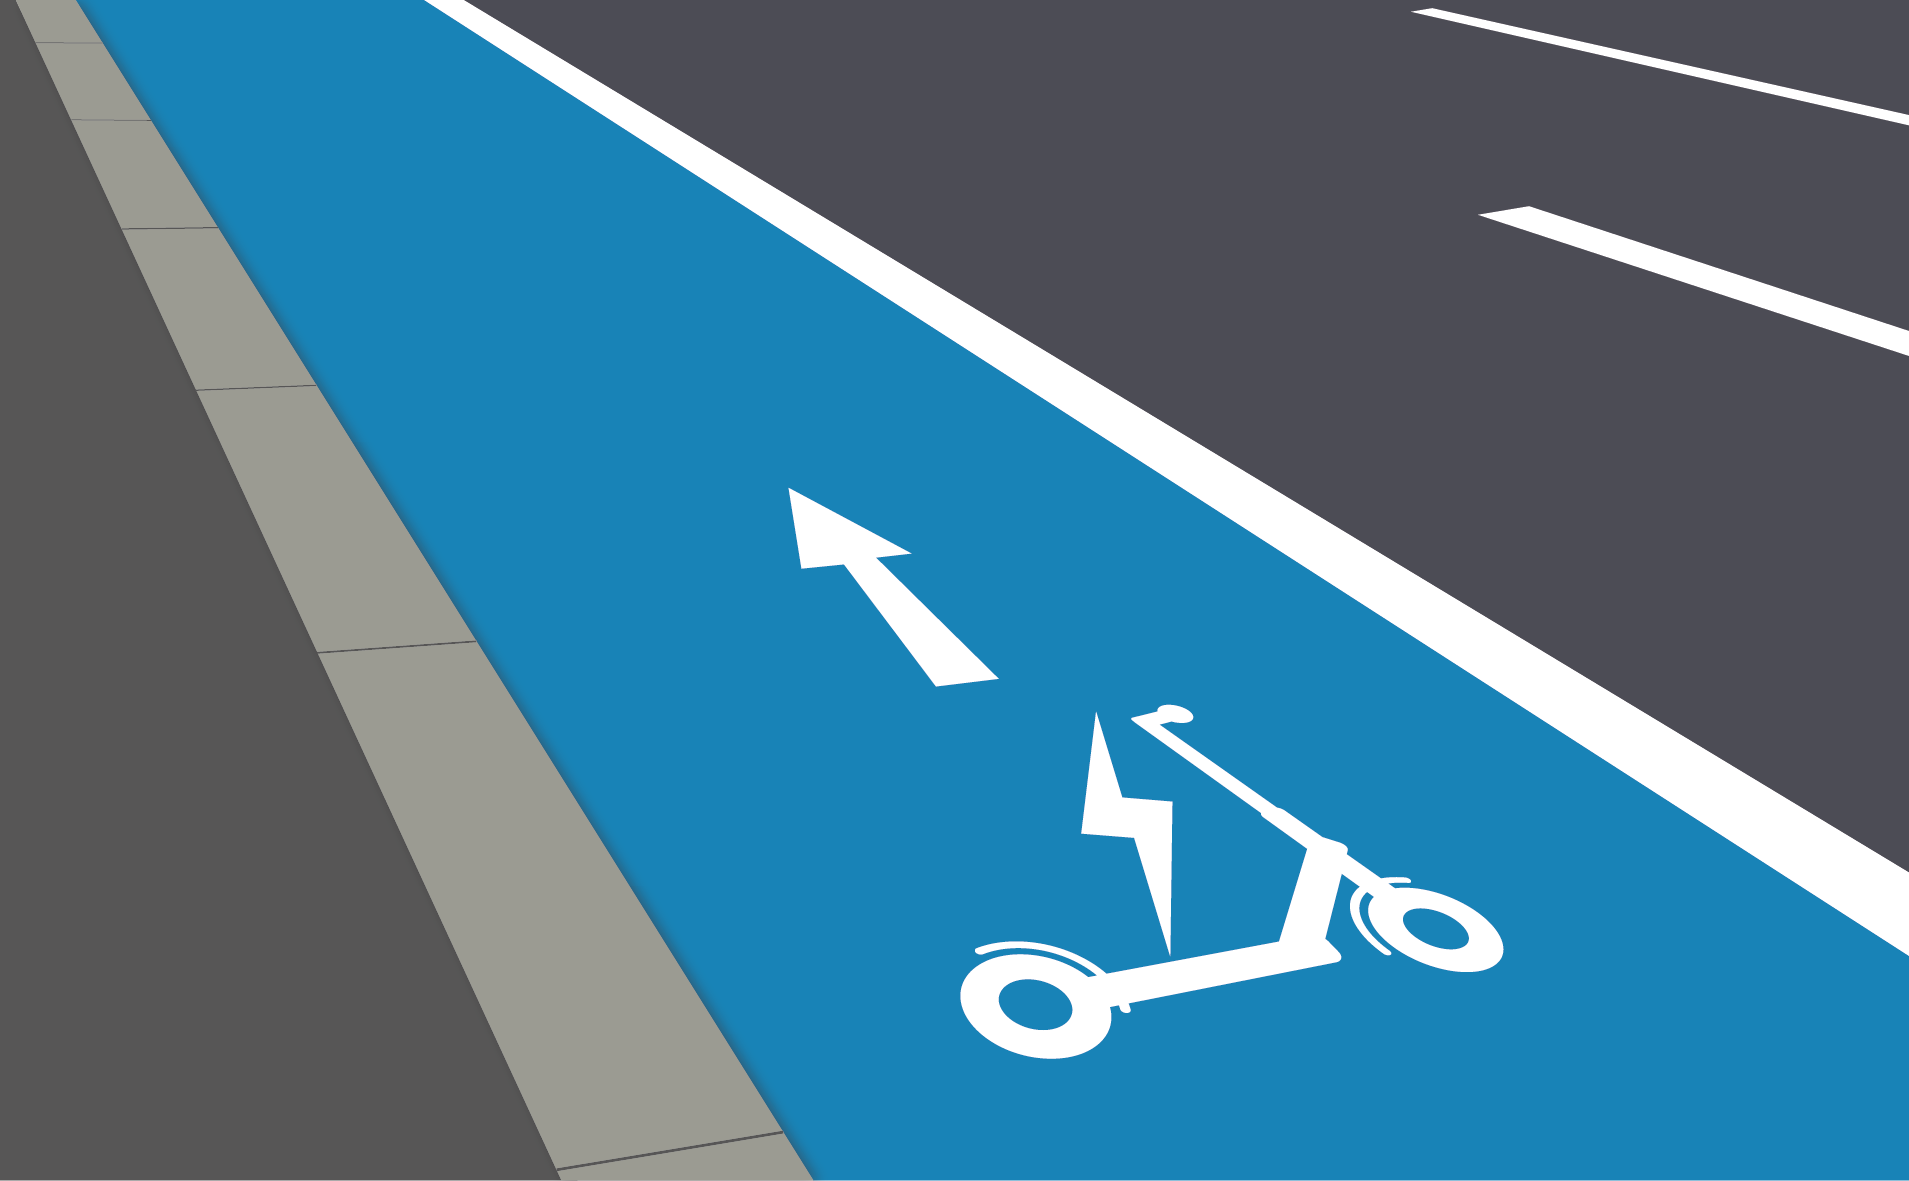 Coloured tarmac cycle lane